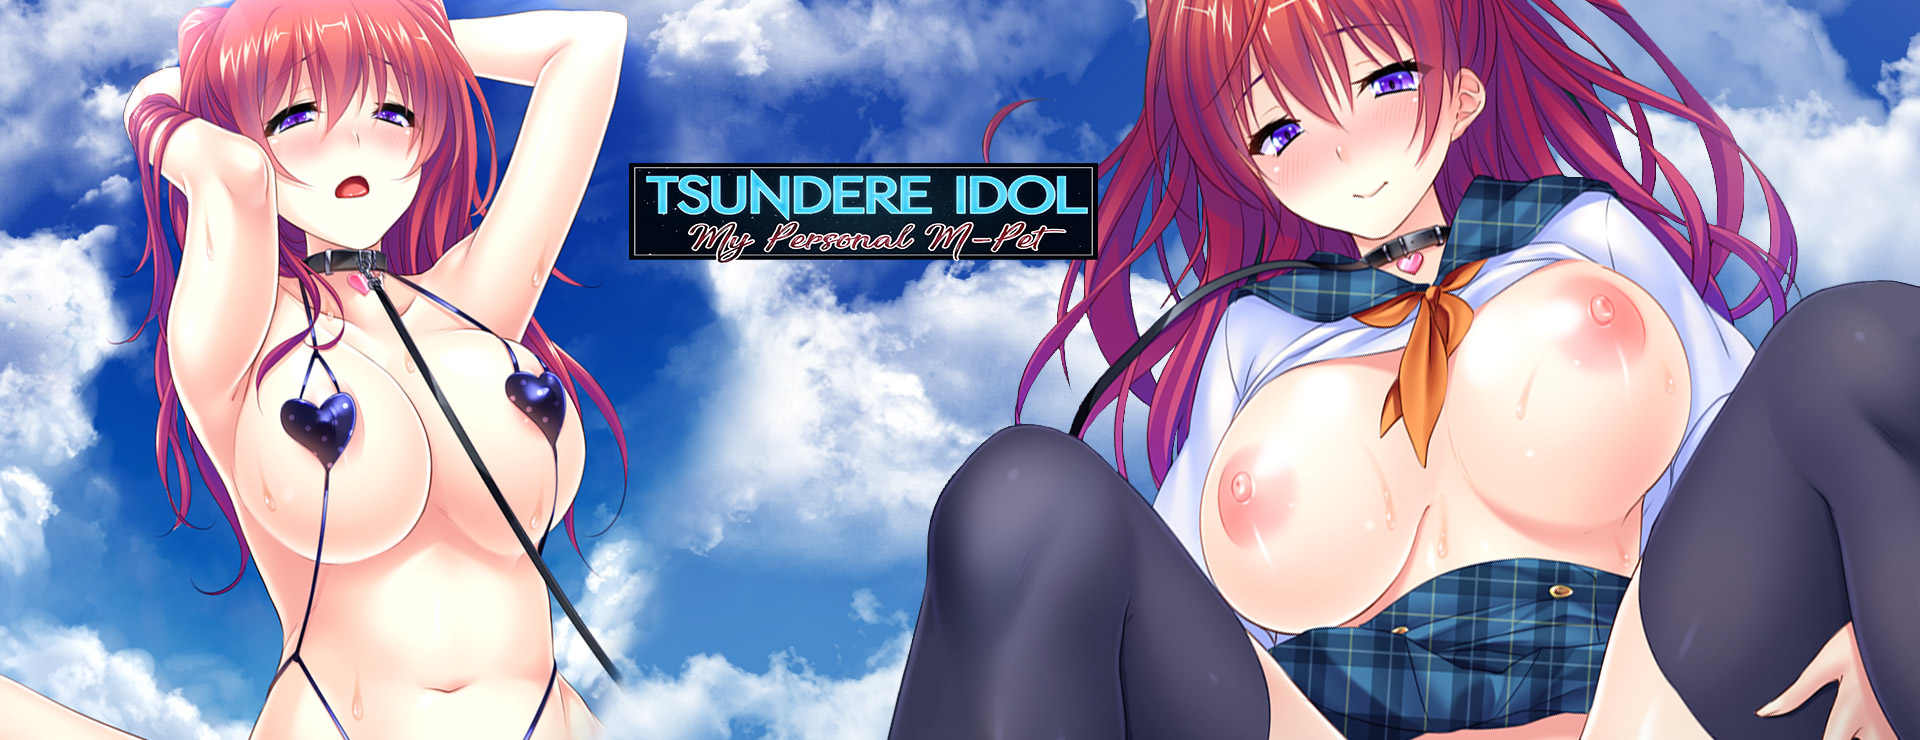 Tsundere Idol: My Personal M-Pet - Novela Visual Juego